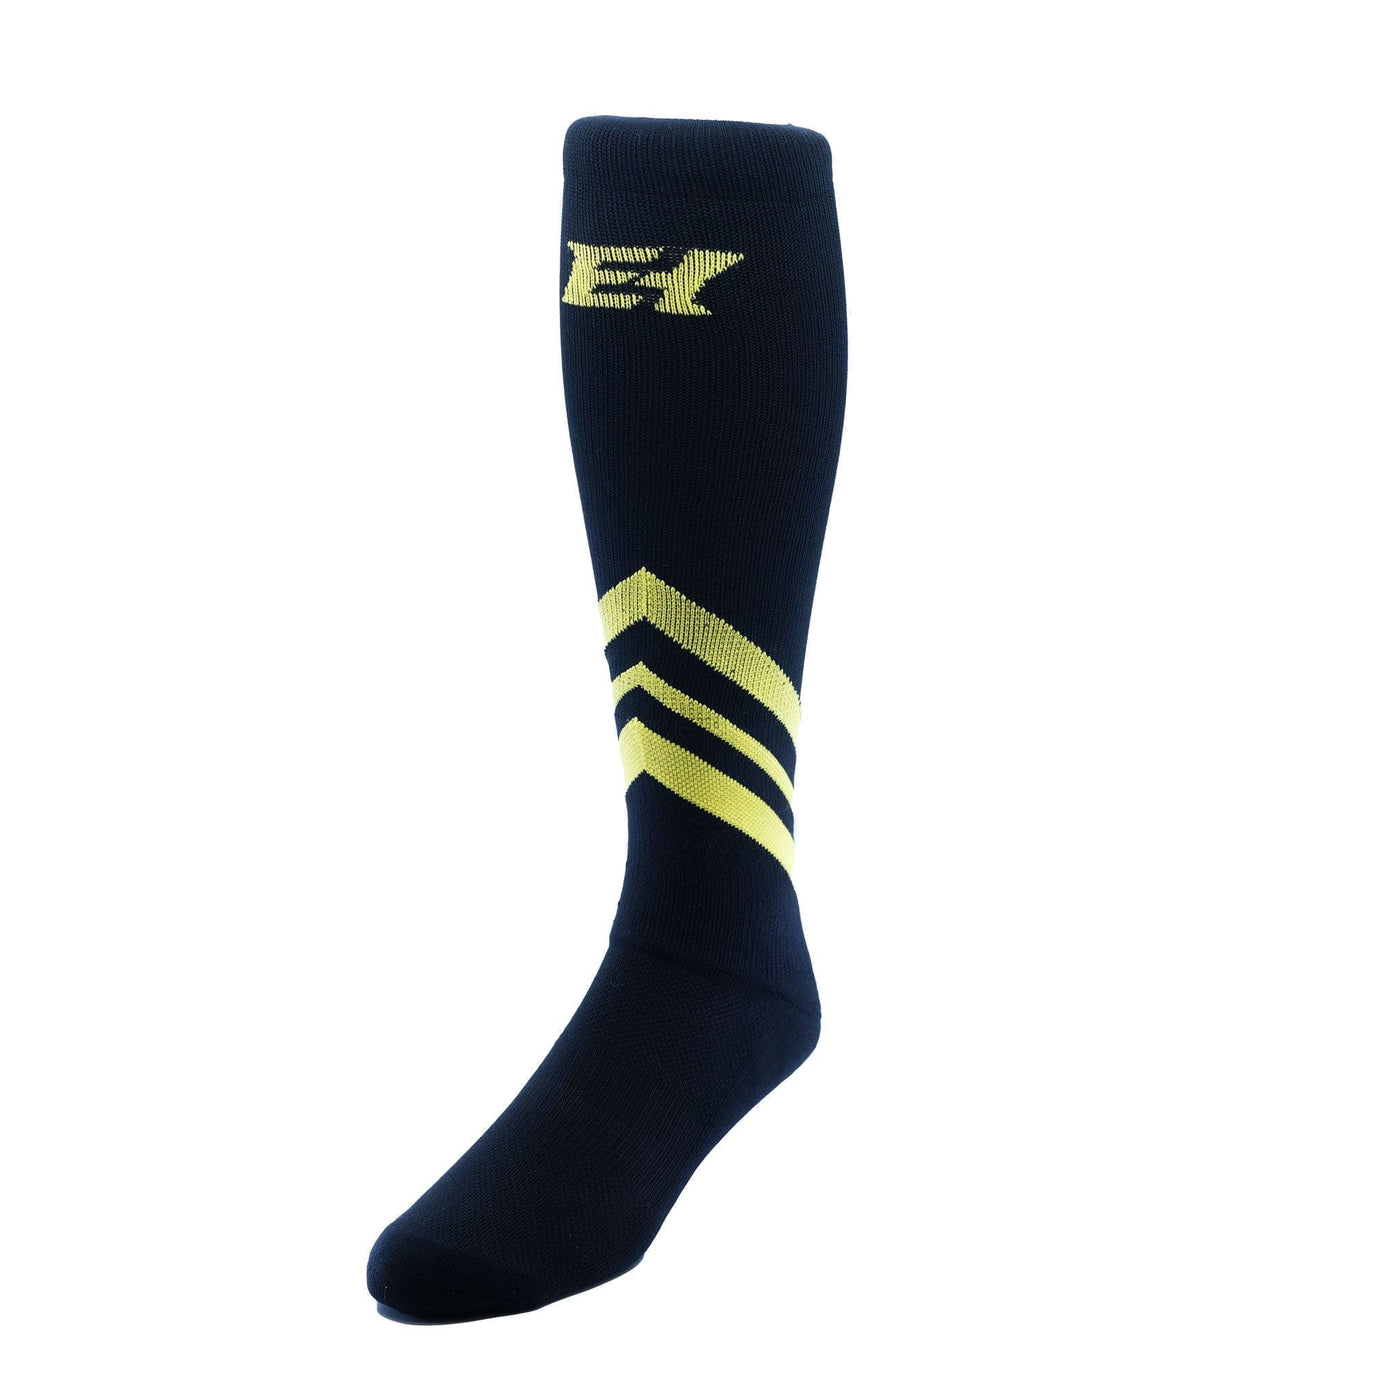 Elite Pro Tech Compression Skate Socks - Knee